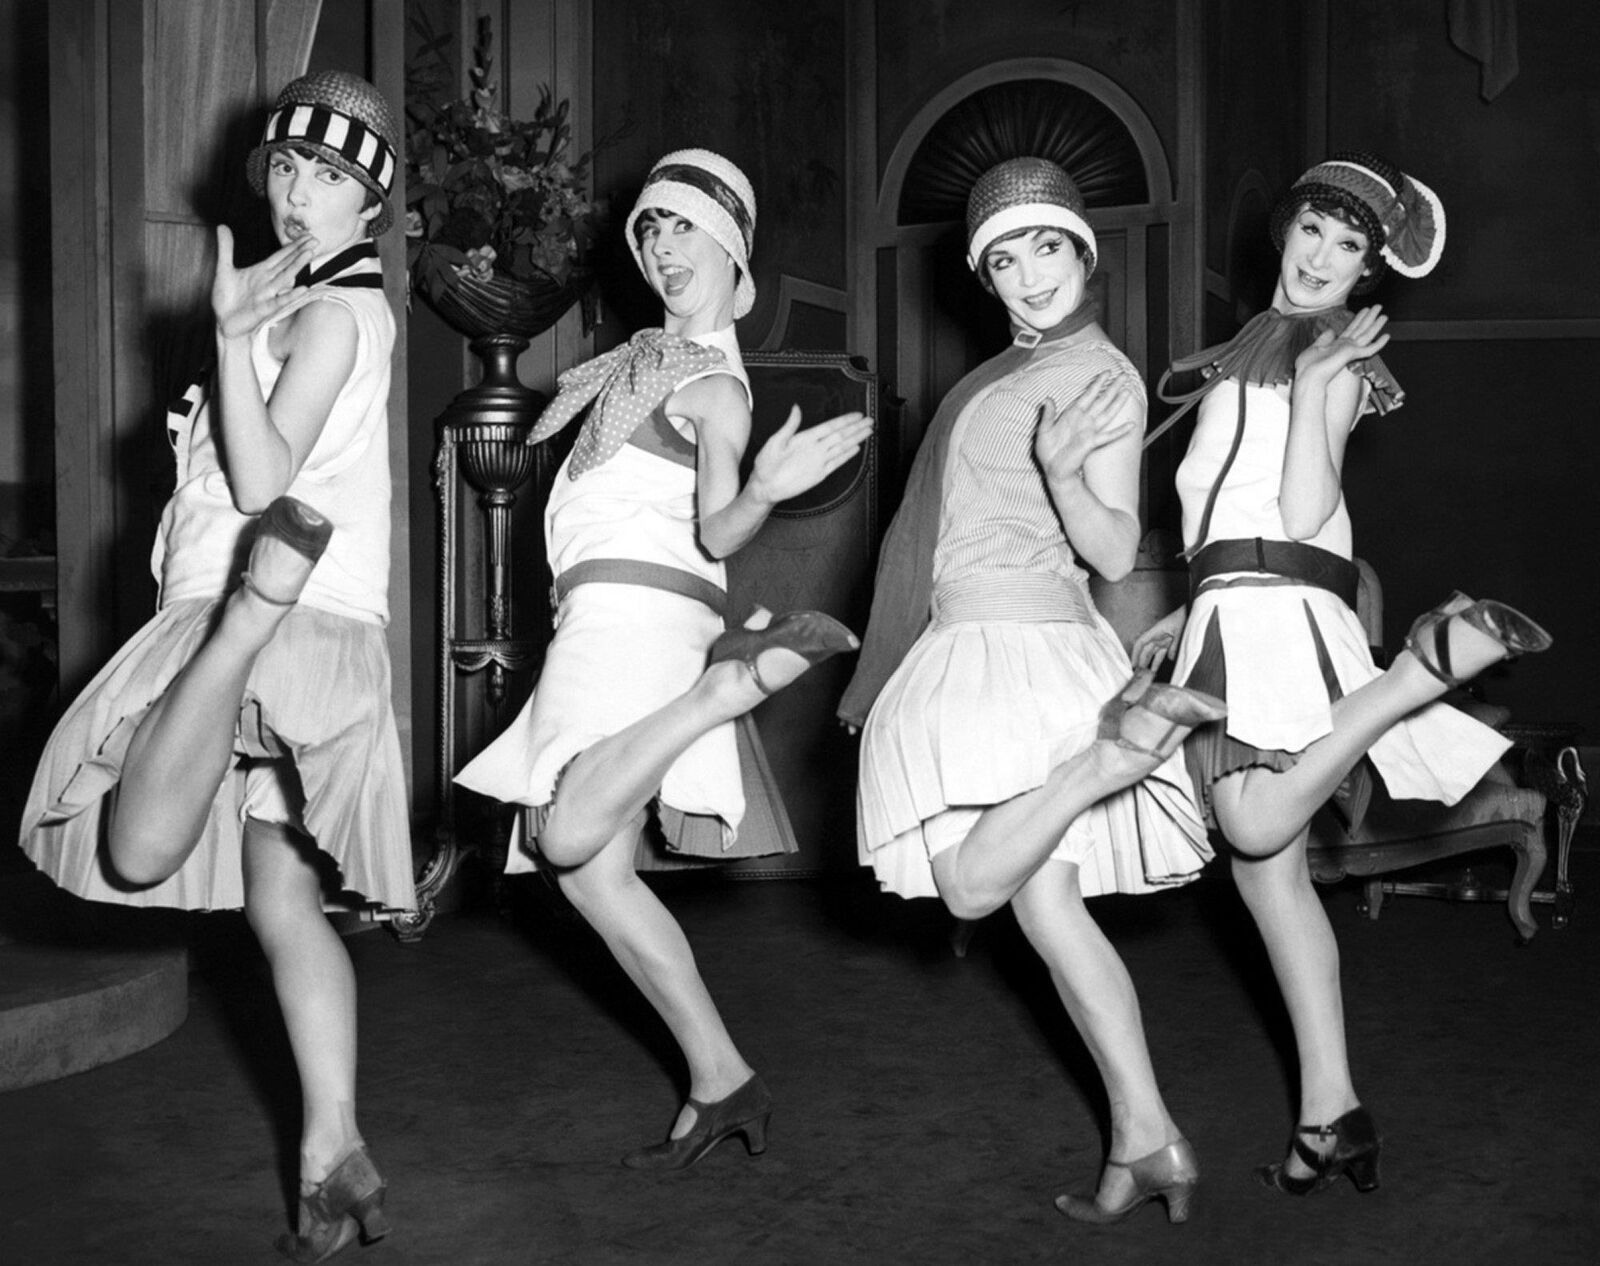 1920s LEGGY FLAPPERS DANCING THE CHARLESTON 8x10 Borderless Photo